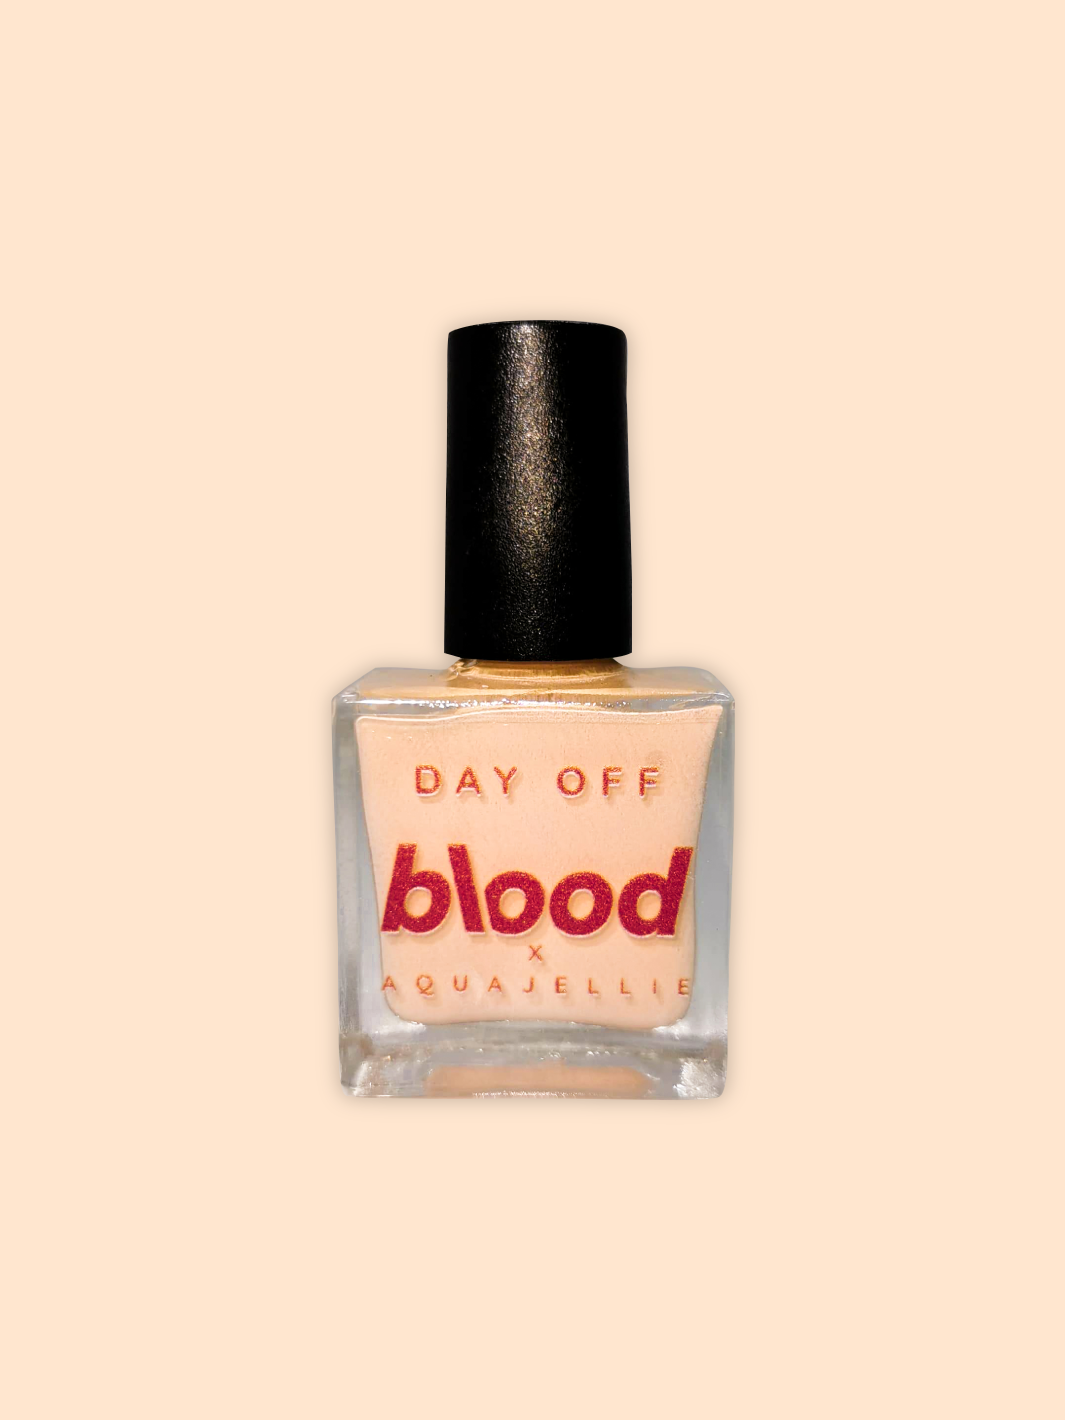 Blood x Aquajellie: Nail polish